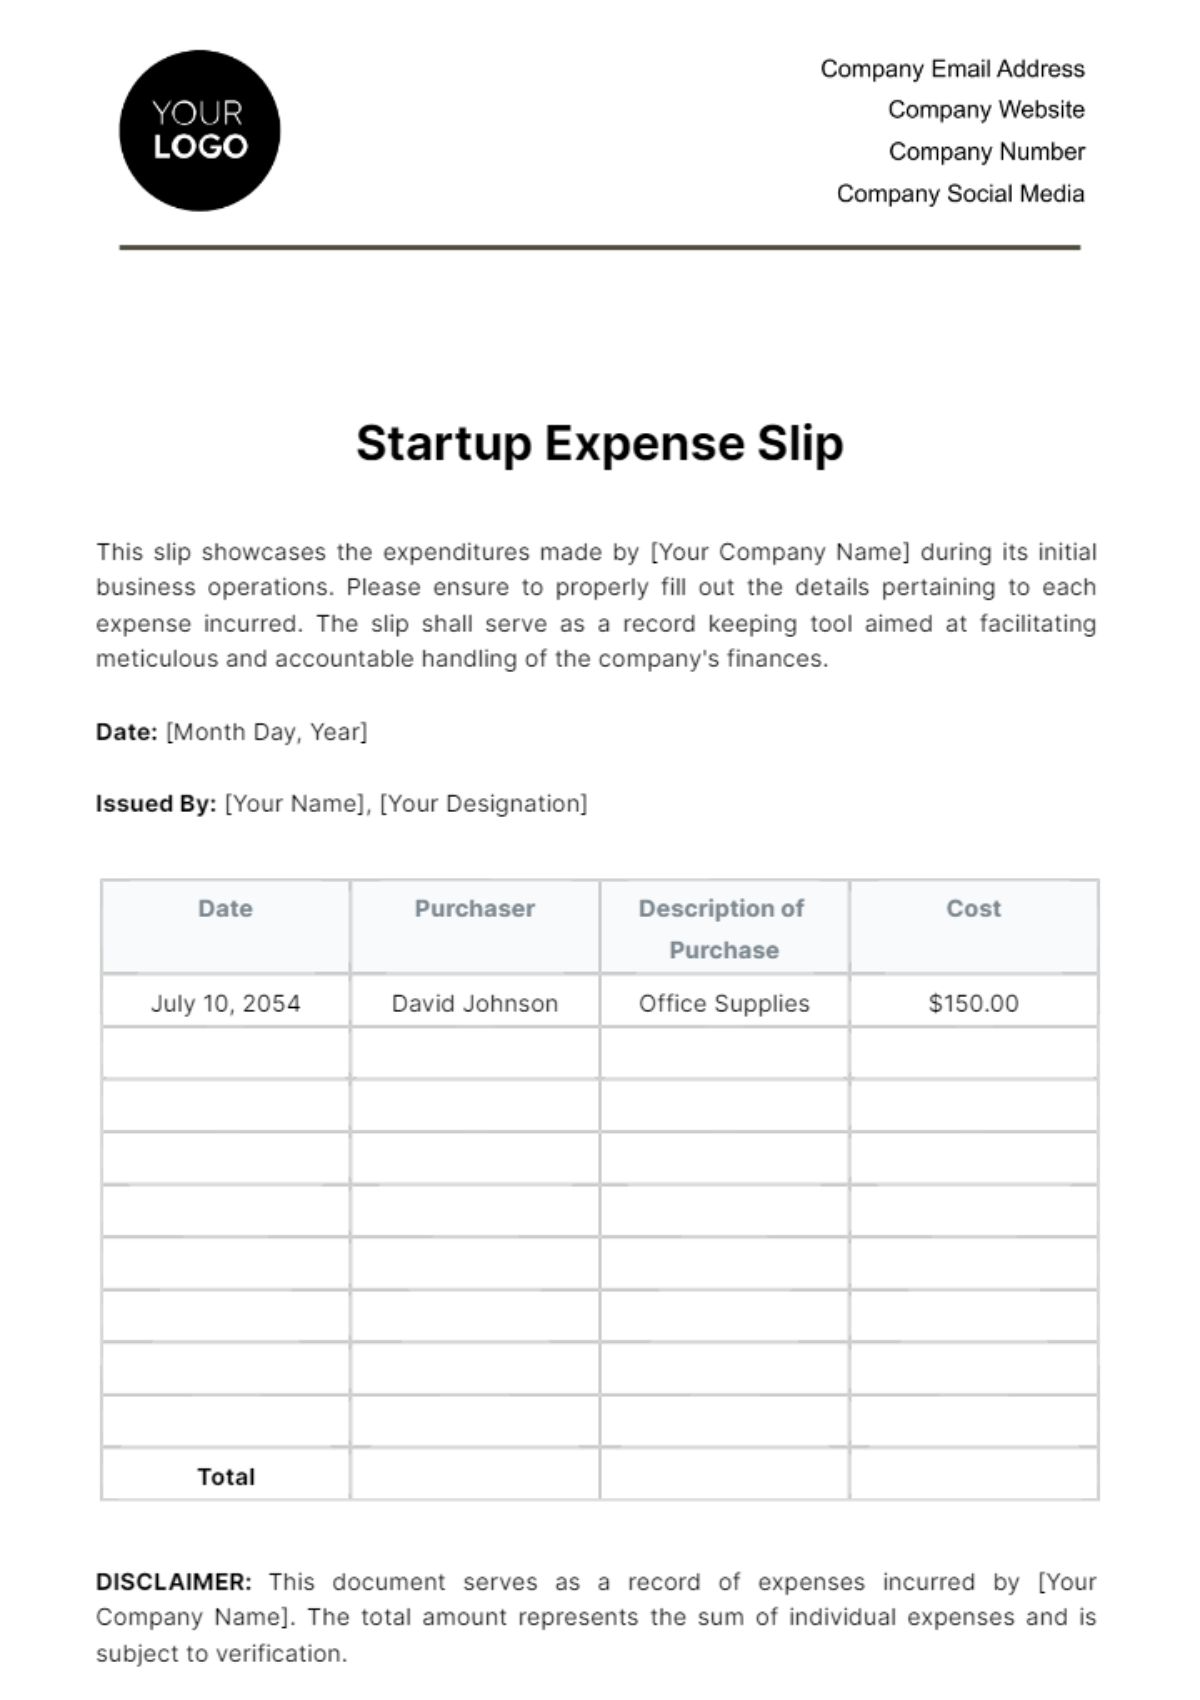 Free Startup Expense Slip Template